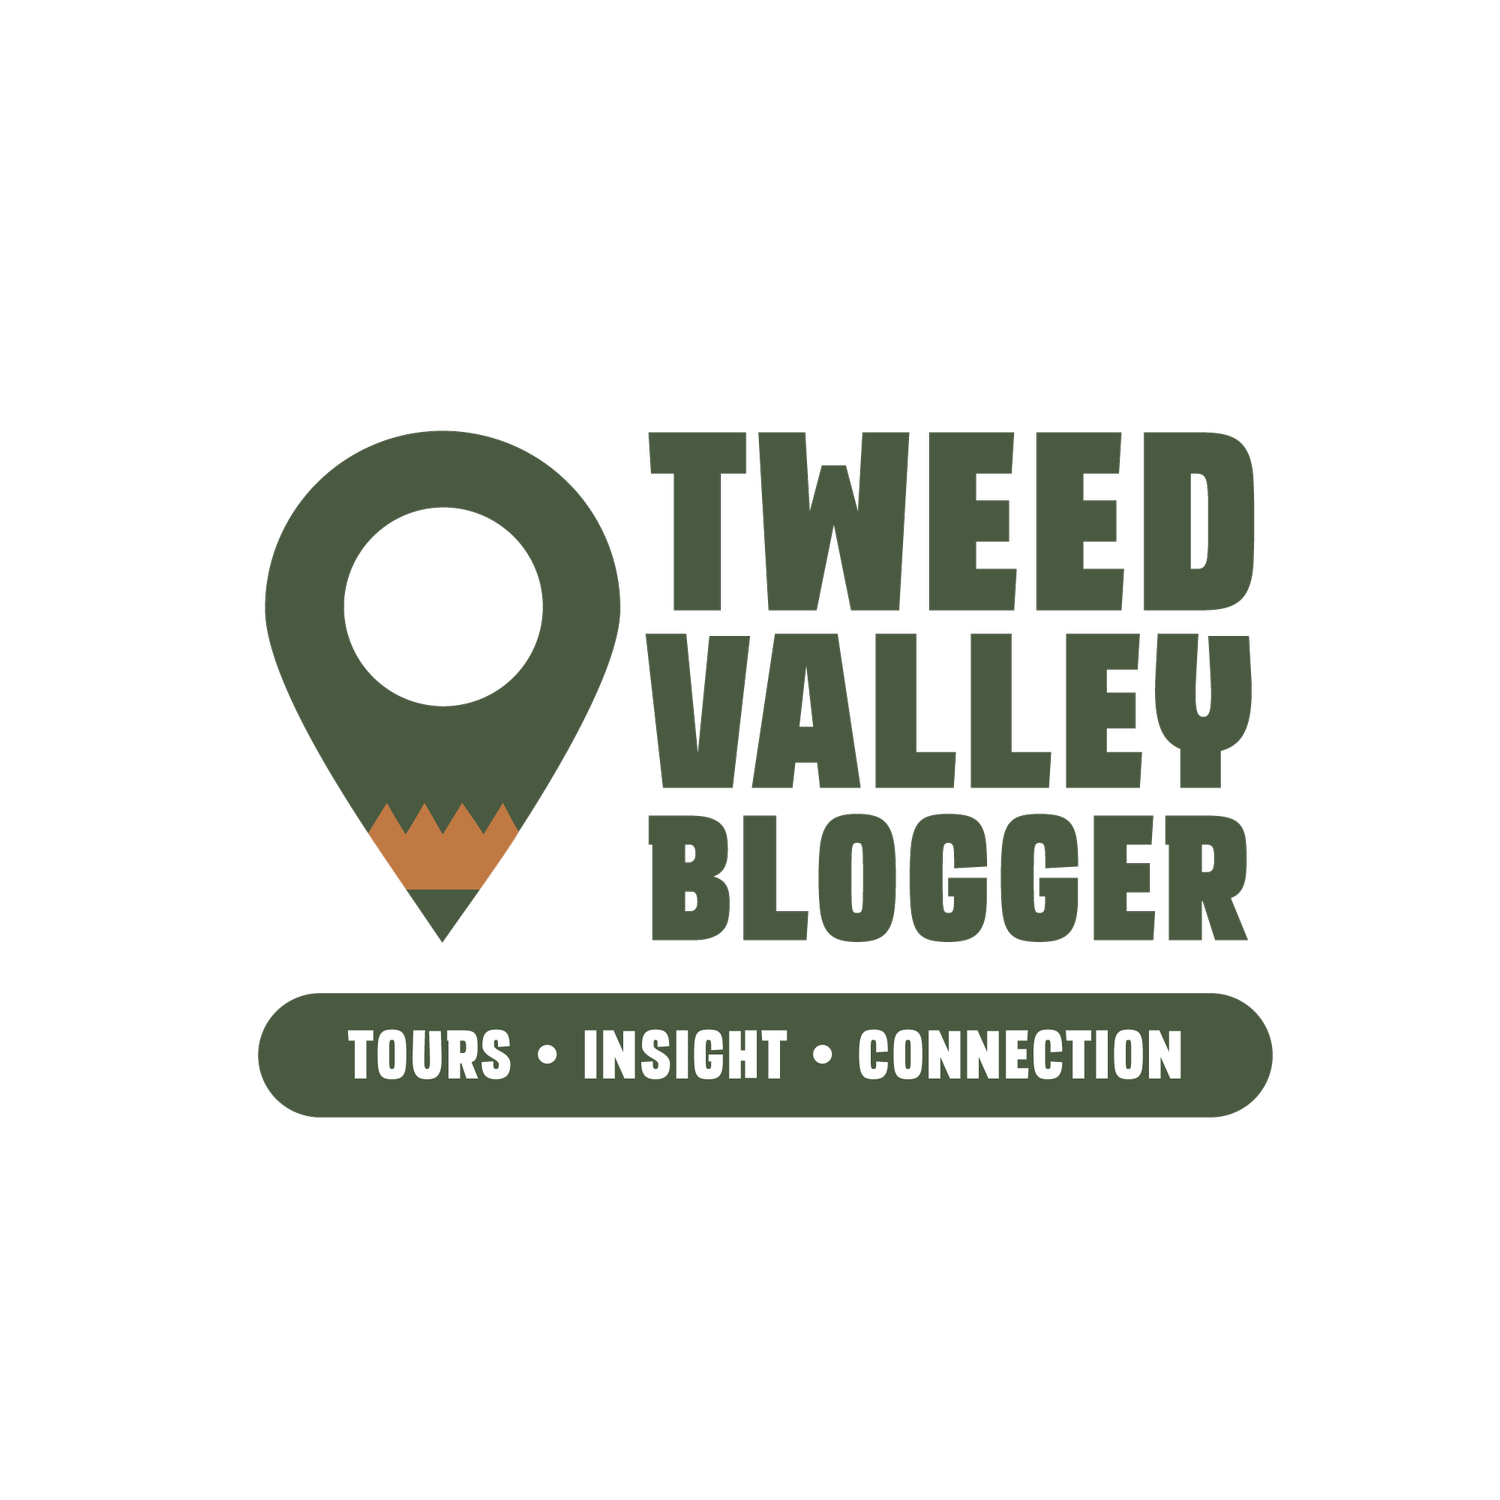 Tweed Valley Blogger | TVB Tours | Scottish Borders